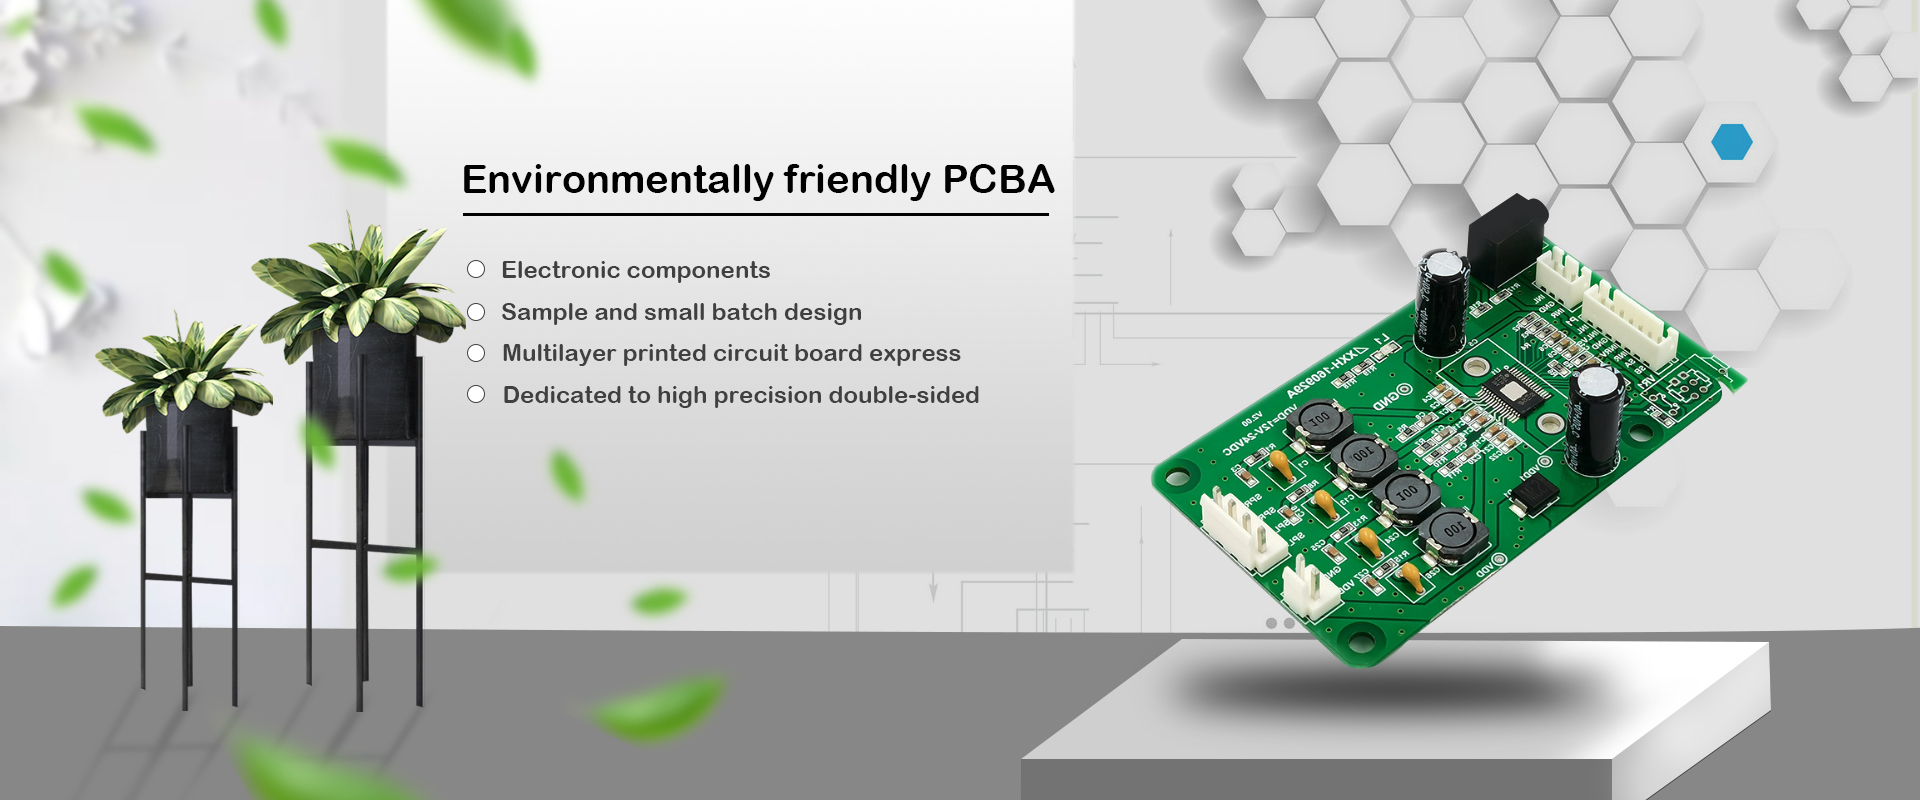 Environmentally friendly PCBA